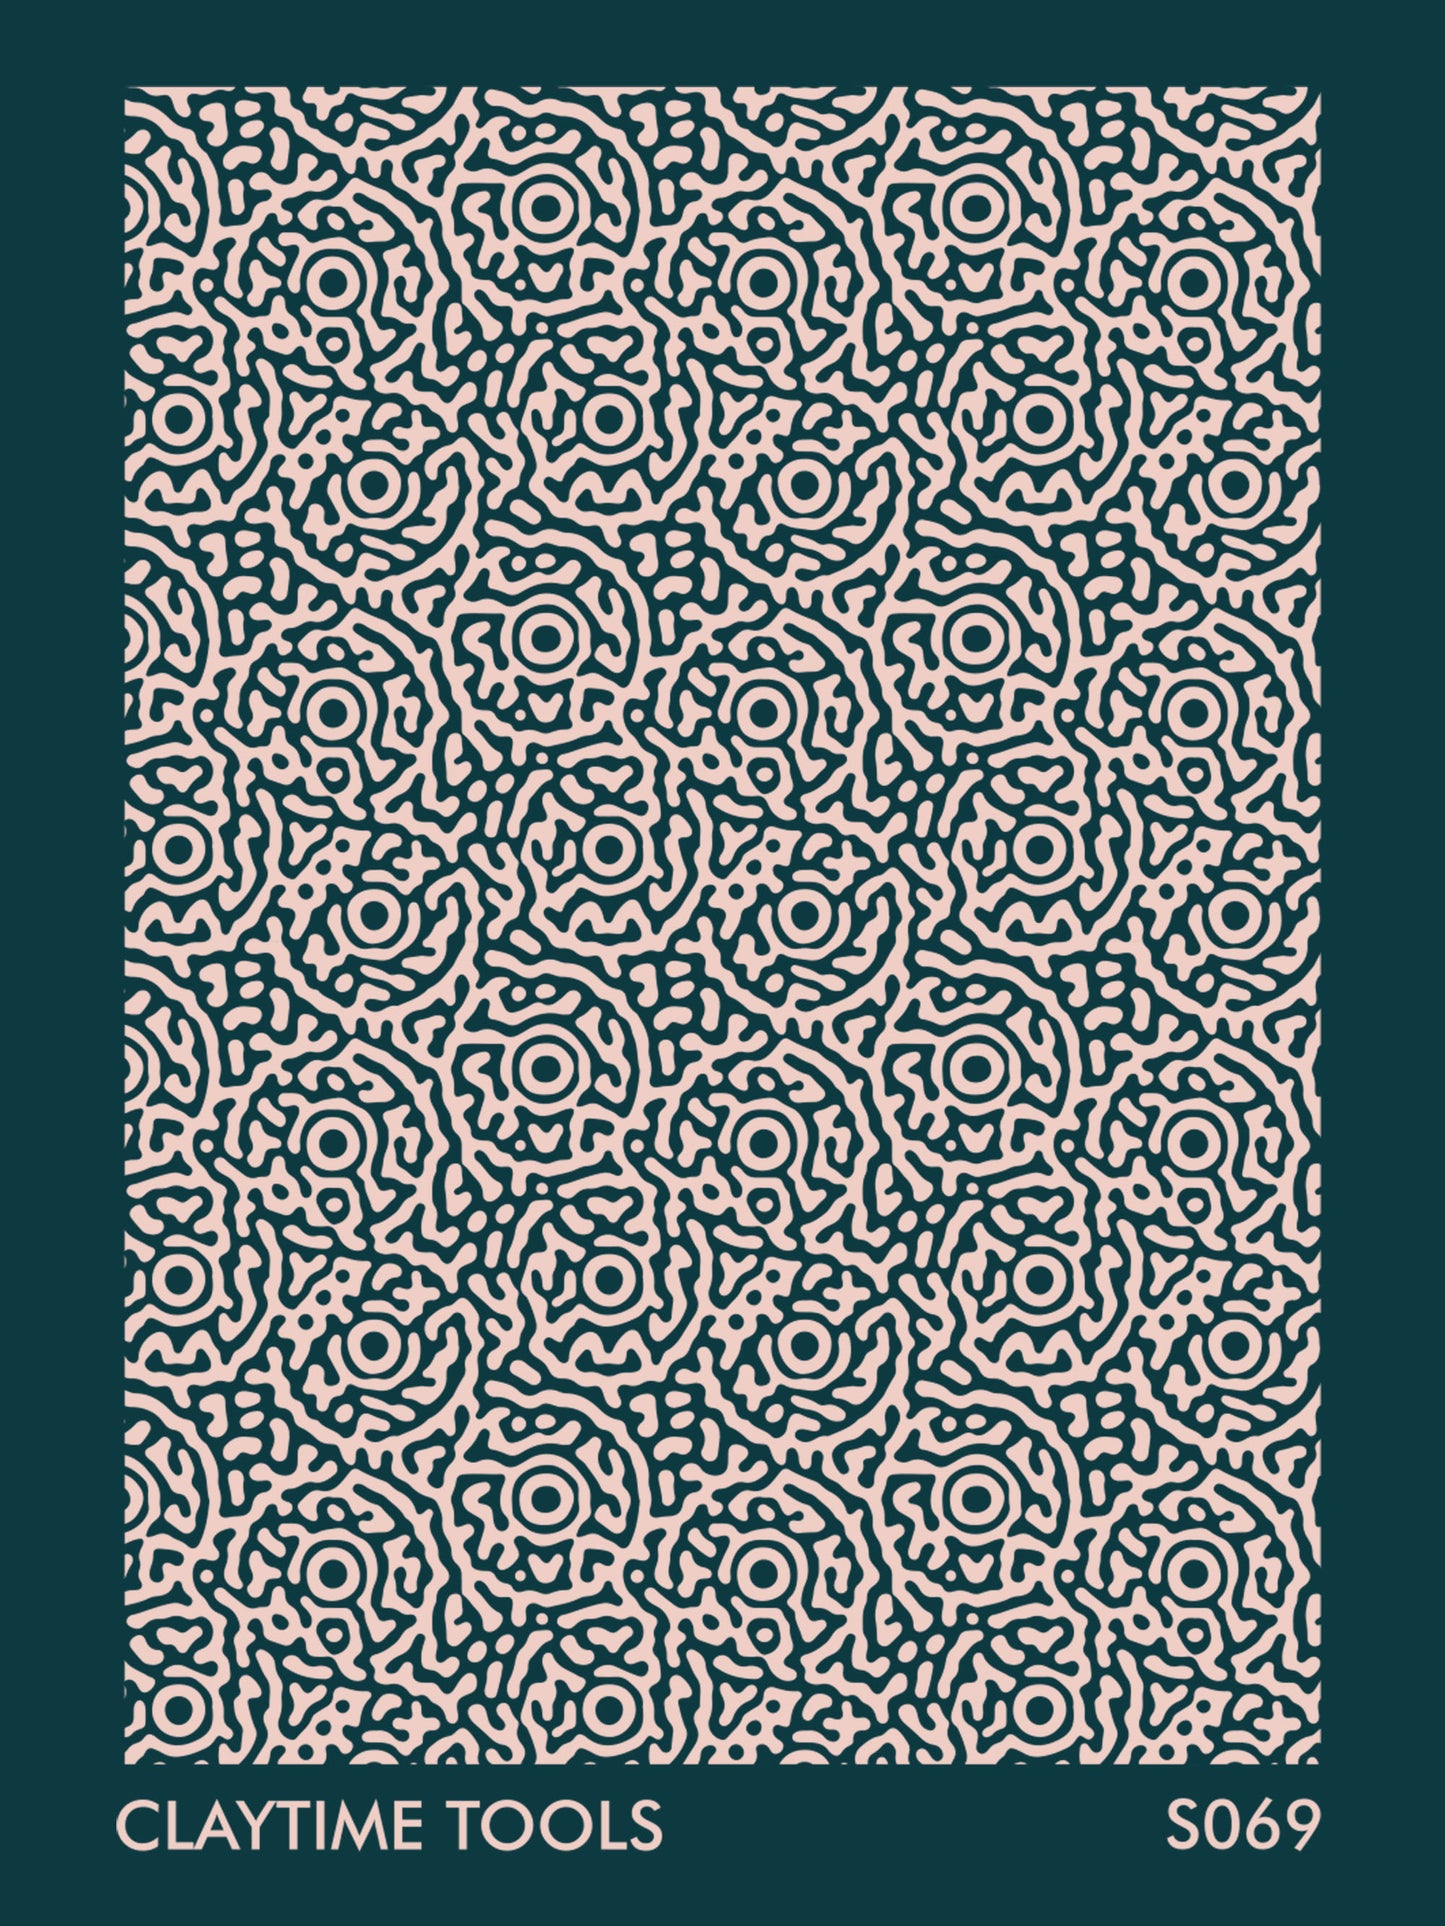 Image of a silkscreen print featuring ethnic, organic patterns.